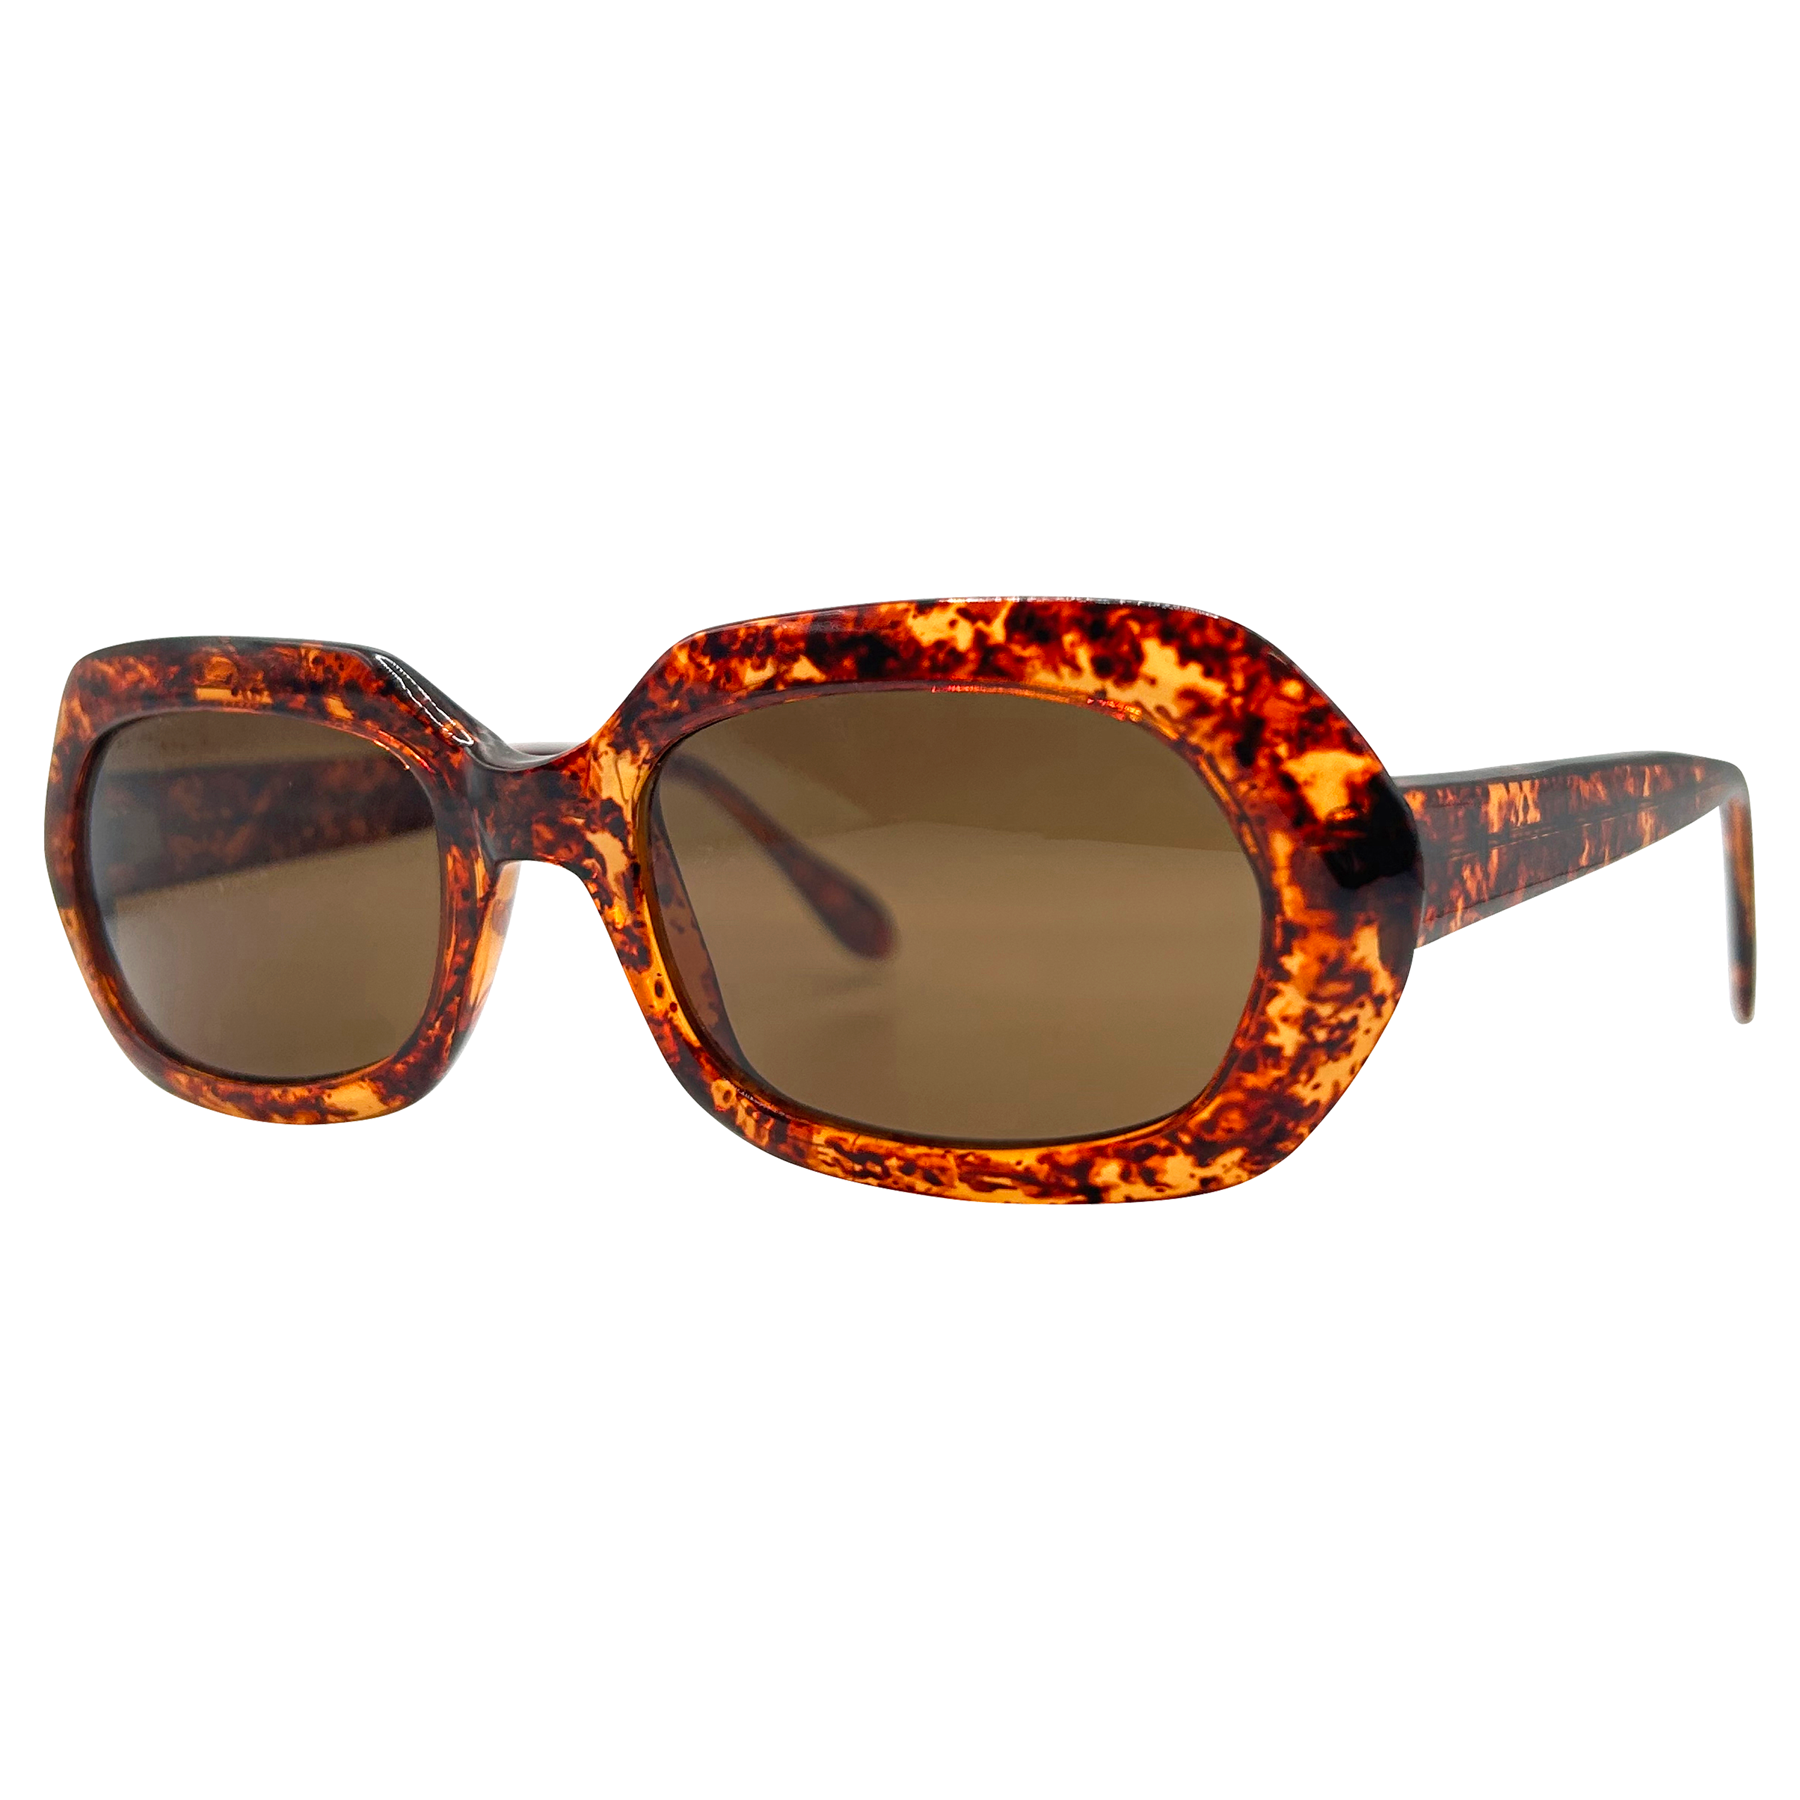 TUESDAY Calico/Brown Mod Sunglasses